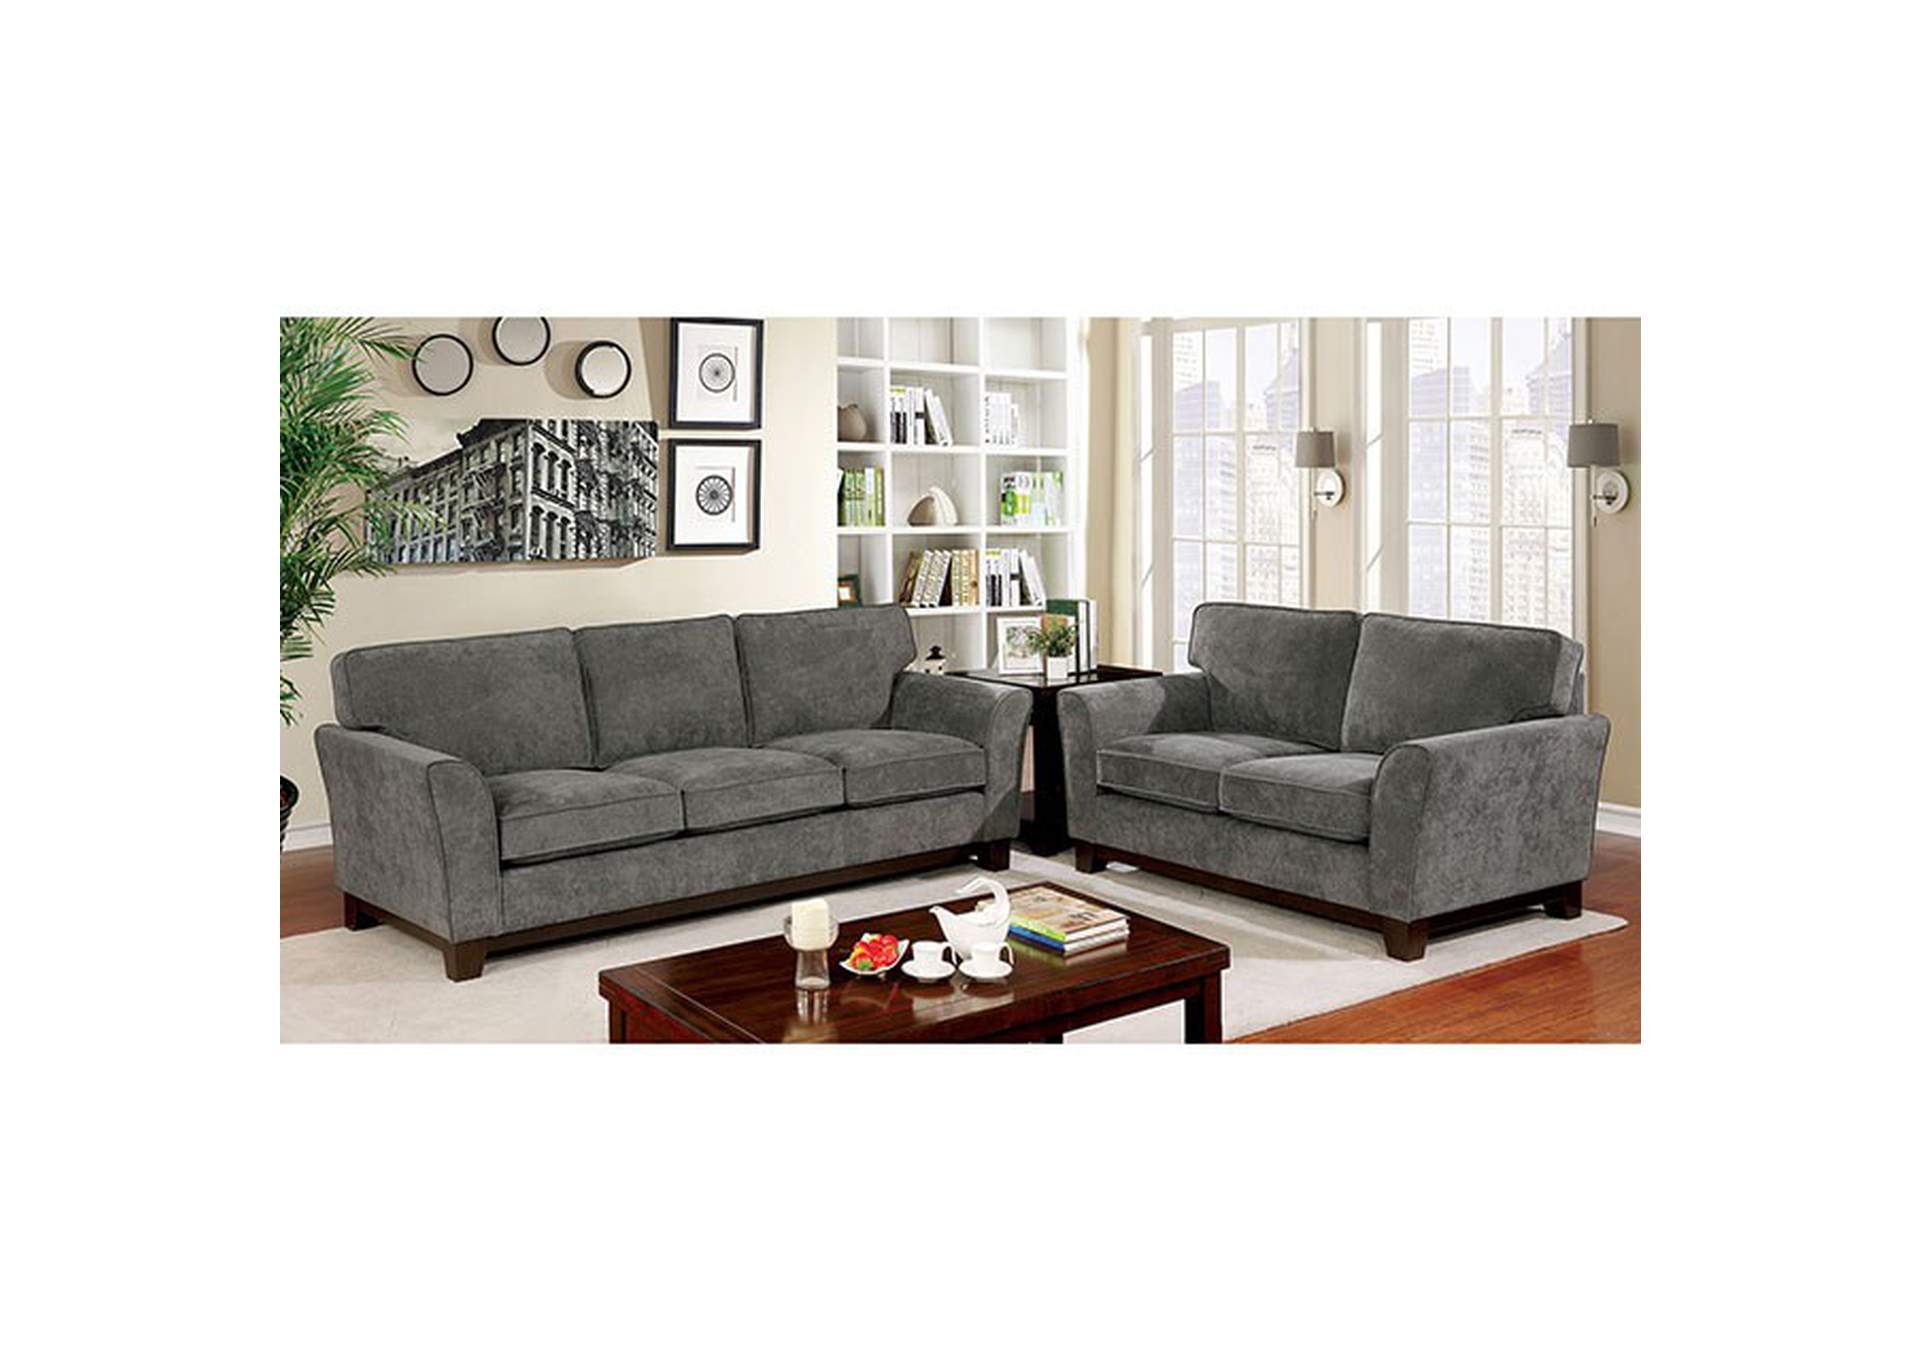 Caldicot Sofa,Furniture of America